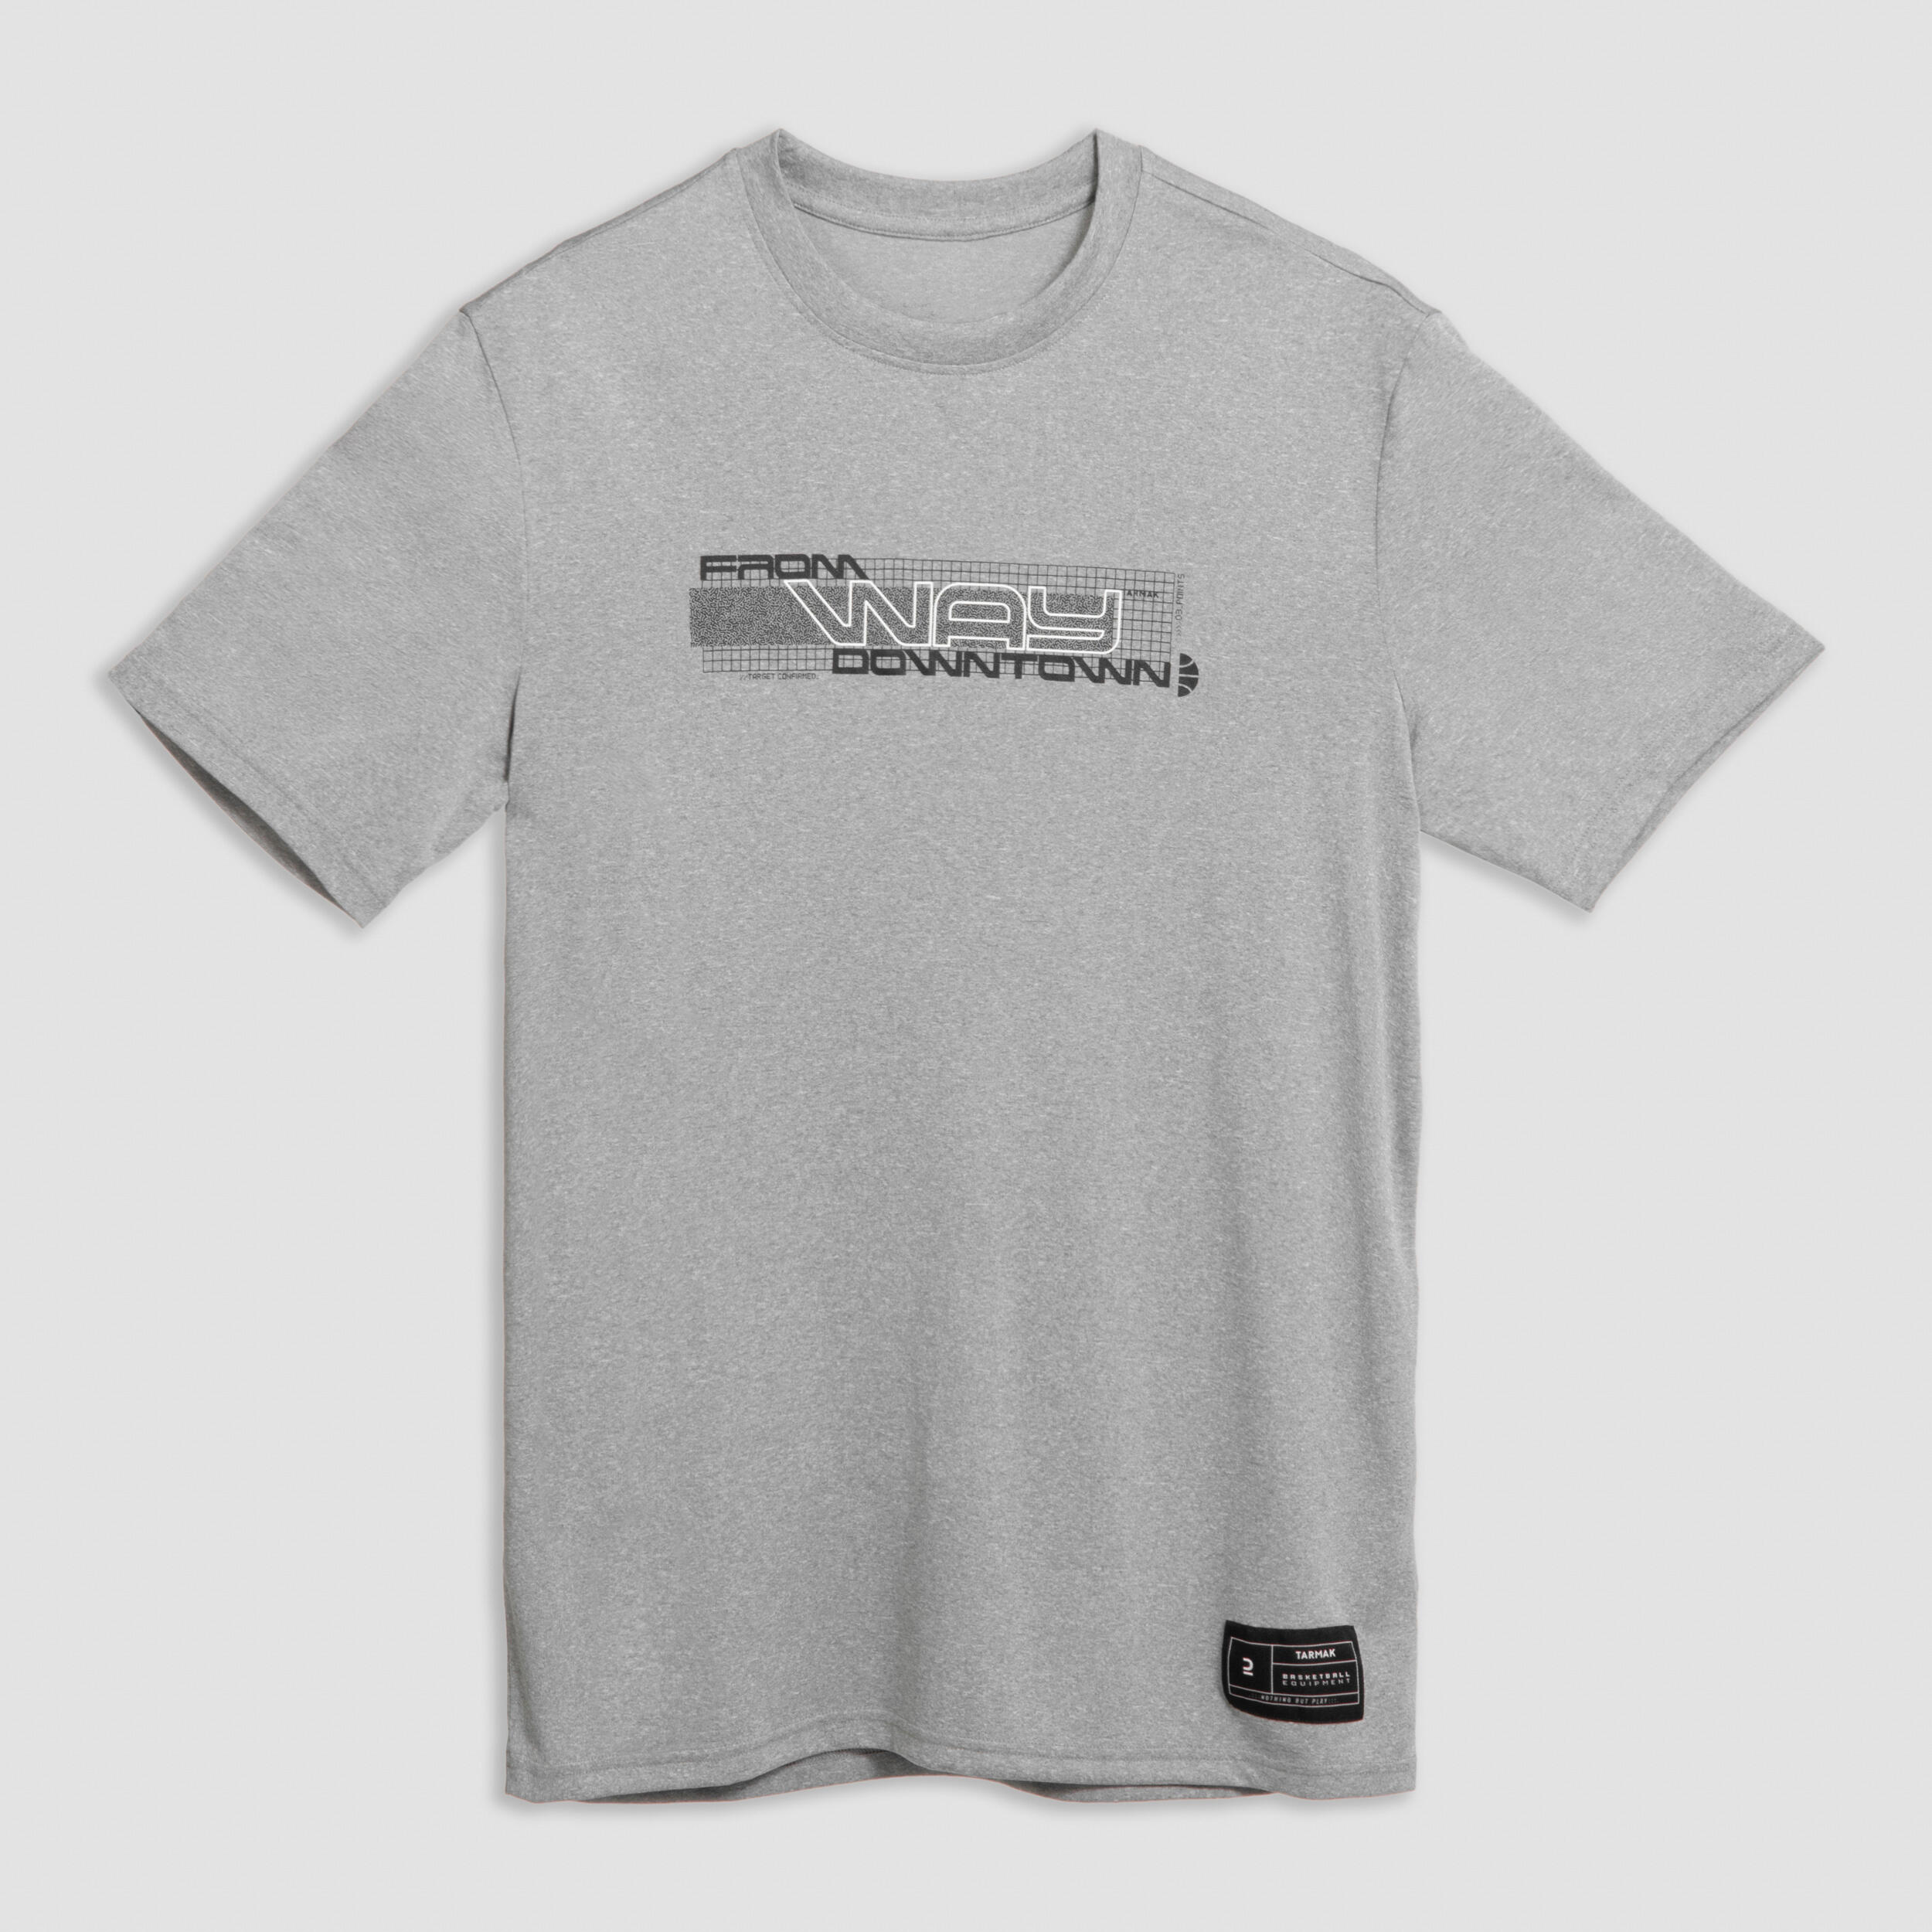 Men's/Women's Basketball T-Shirt/Jersey TS500 Fast - Grey 6/7